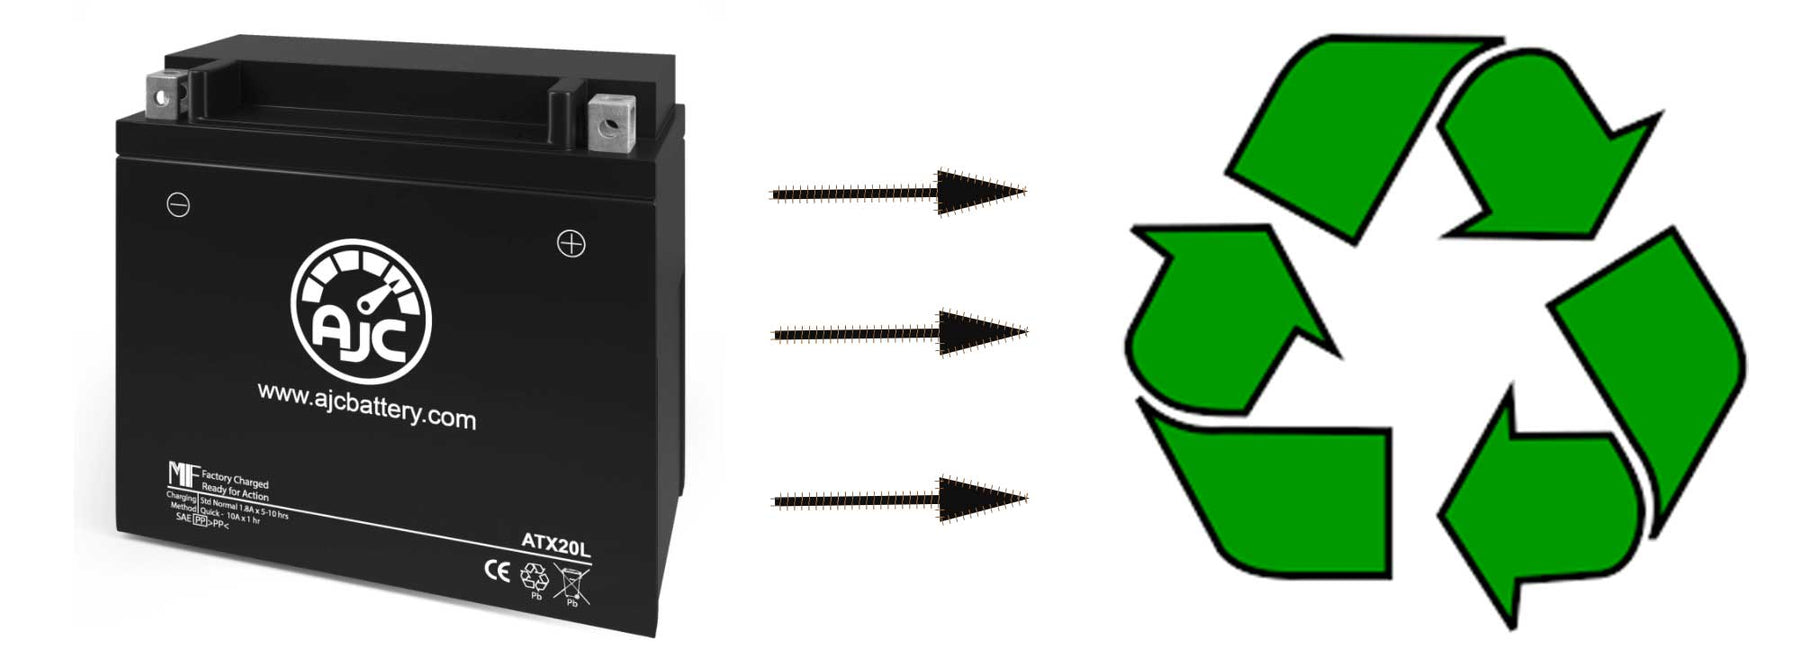 AJC battery arrows to recycling symbol